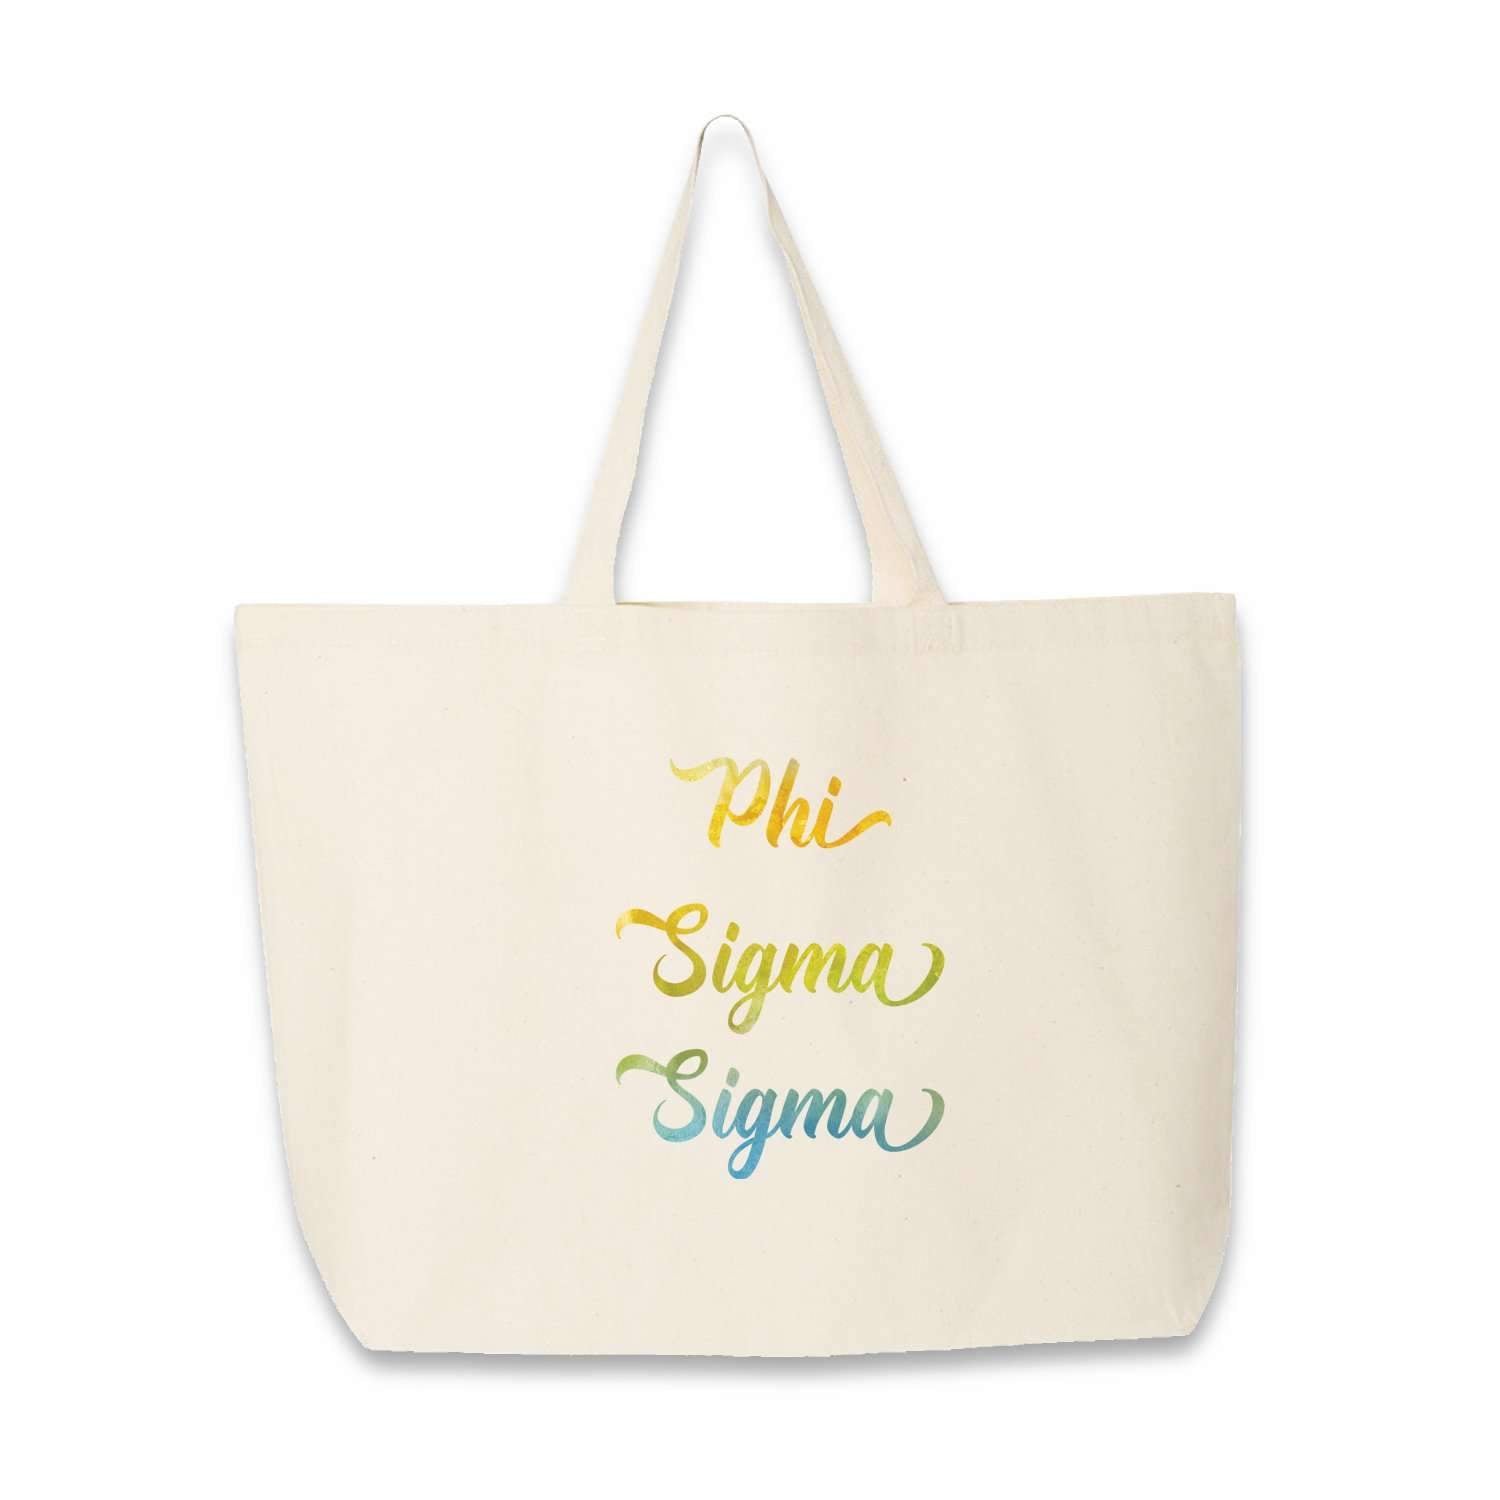 Phi Sigma Sigma sorority name custom printed on canvas tote bag